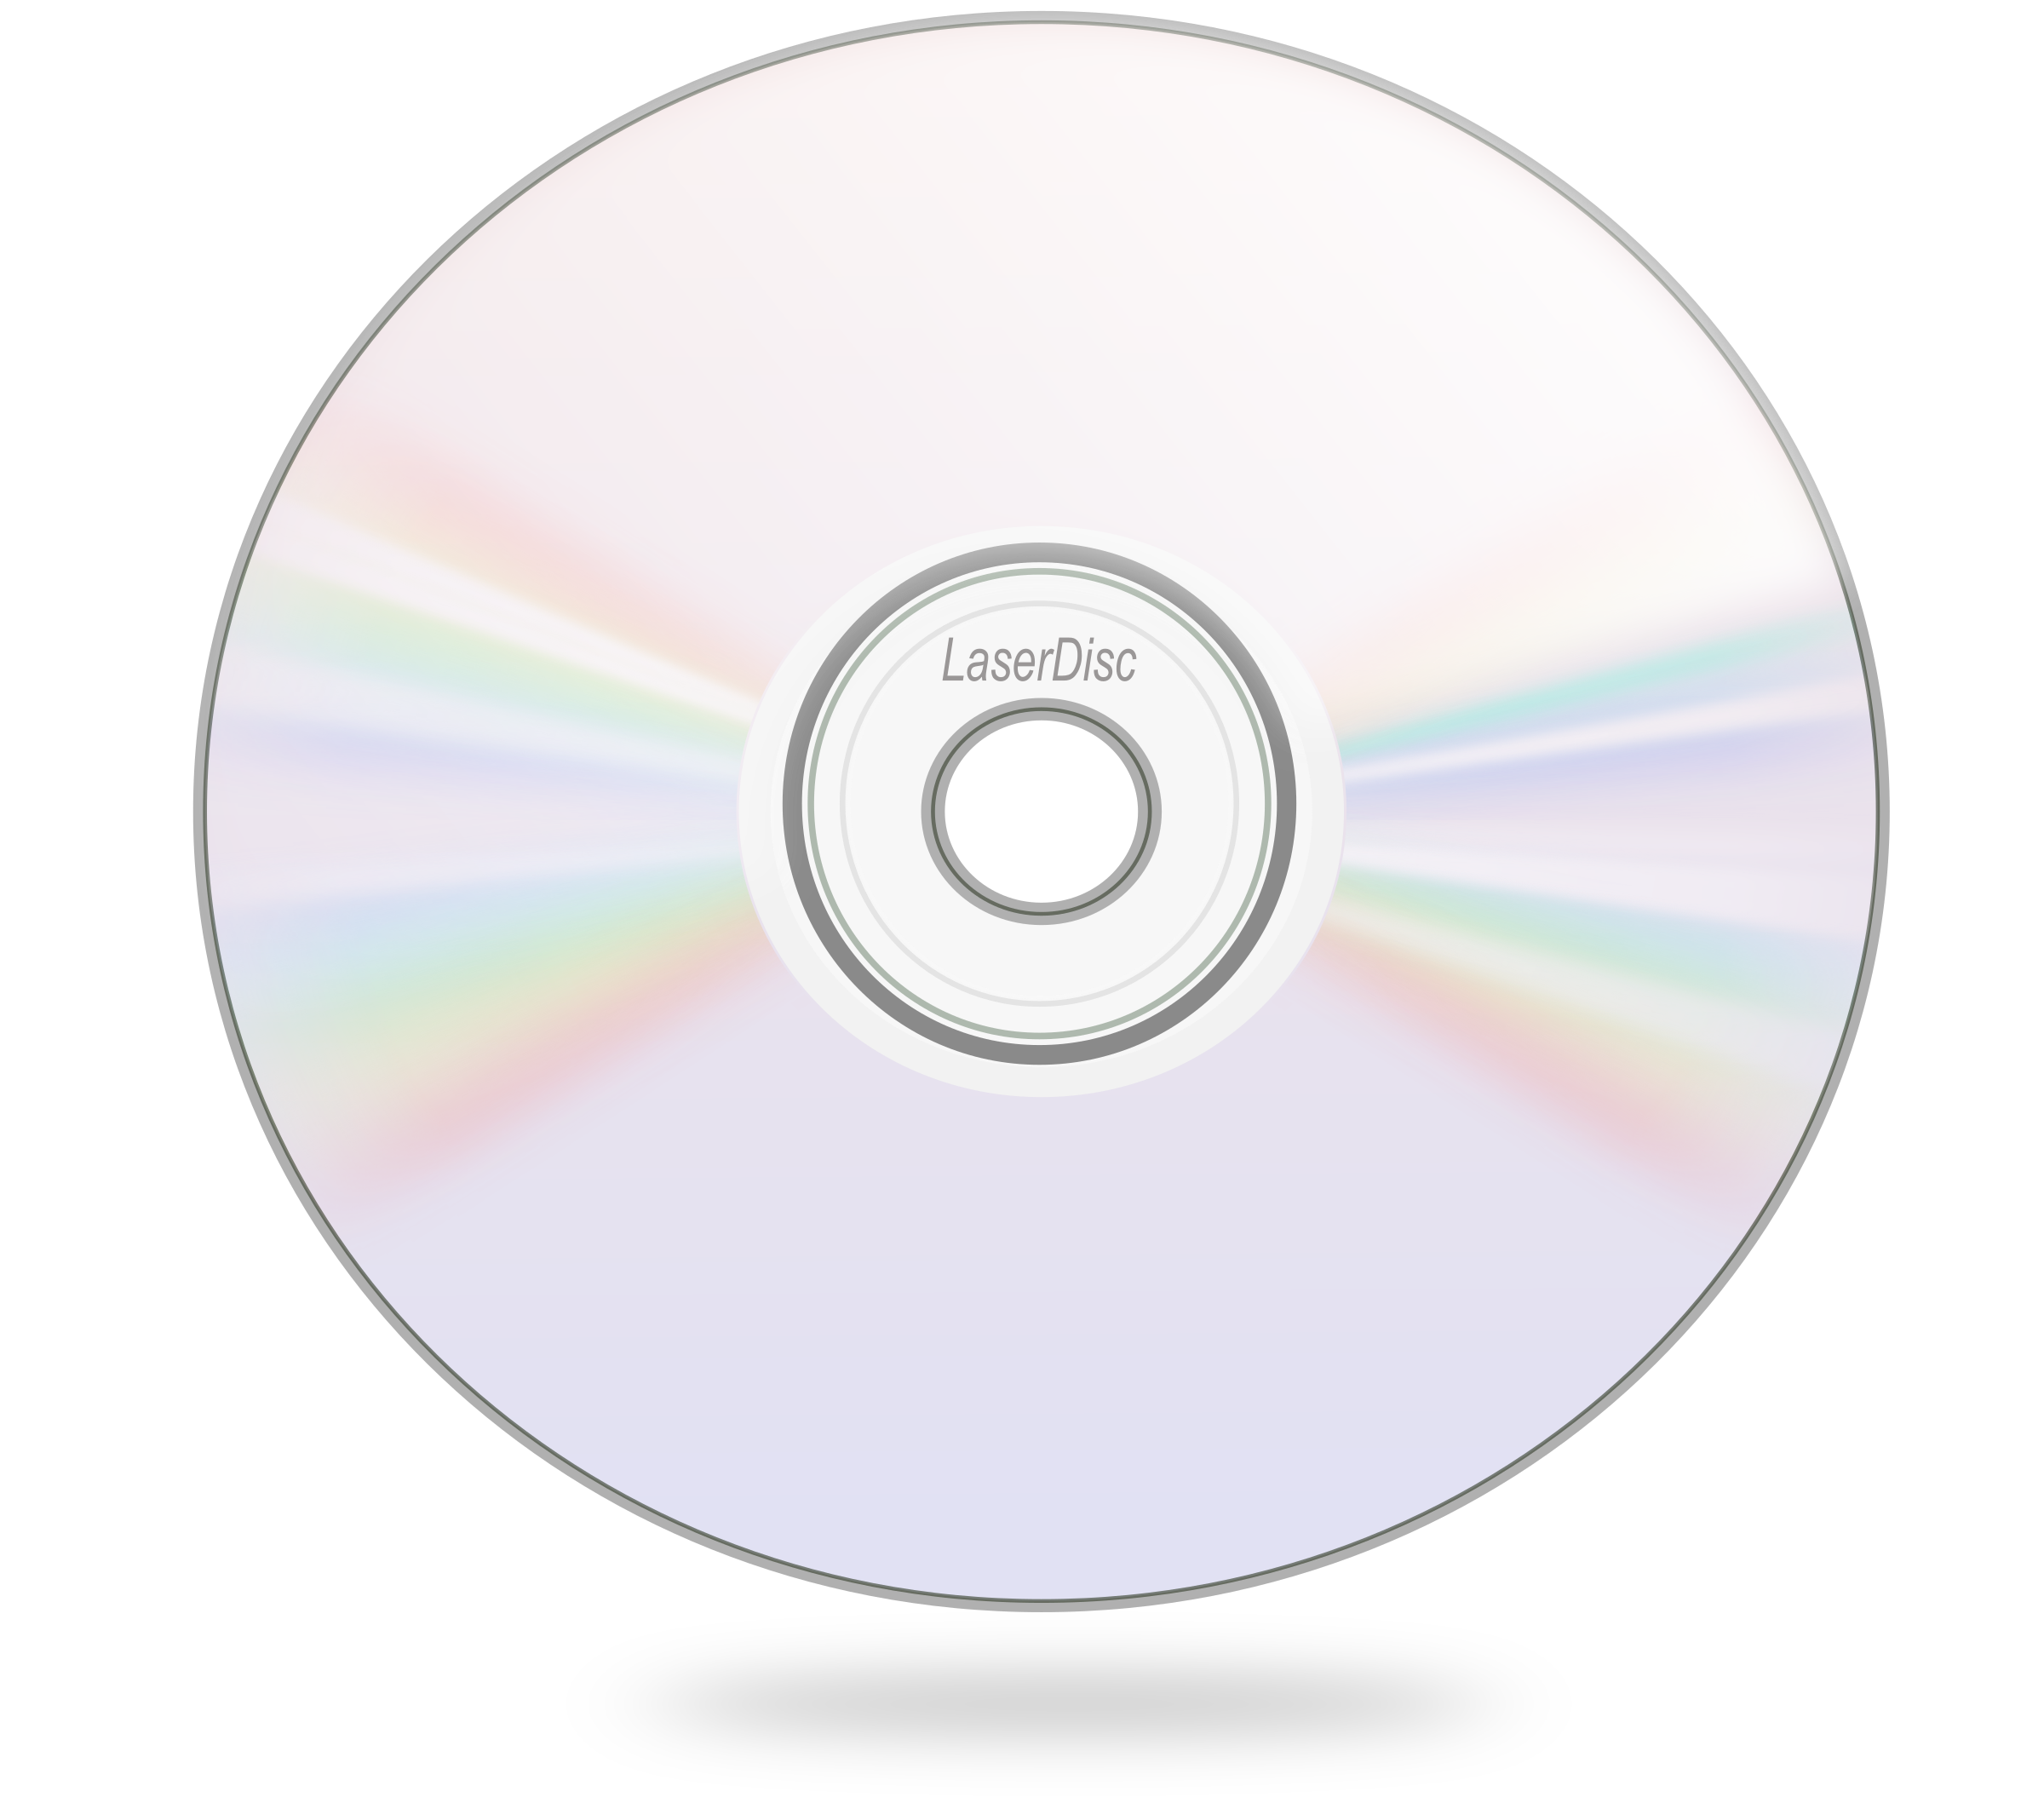 Movie clipart disc. Laserdisc illustration big image